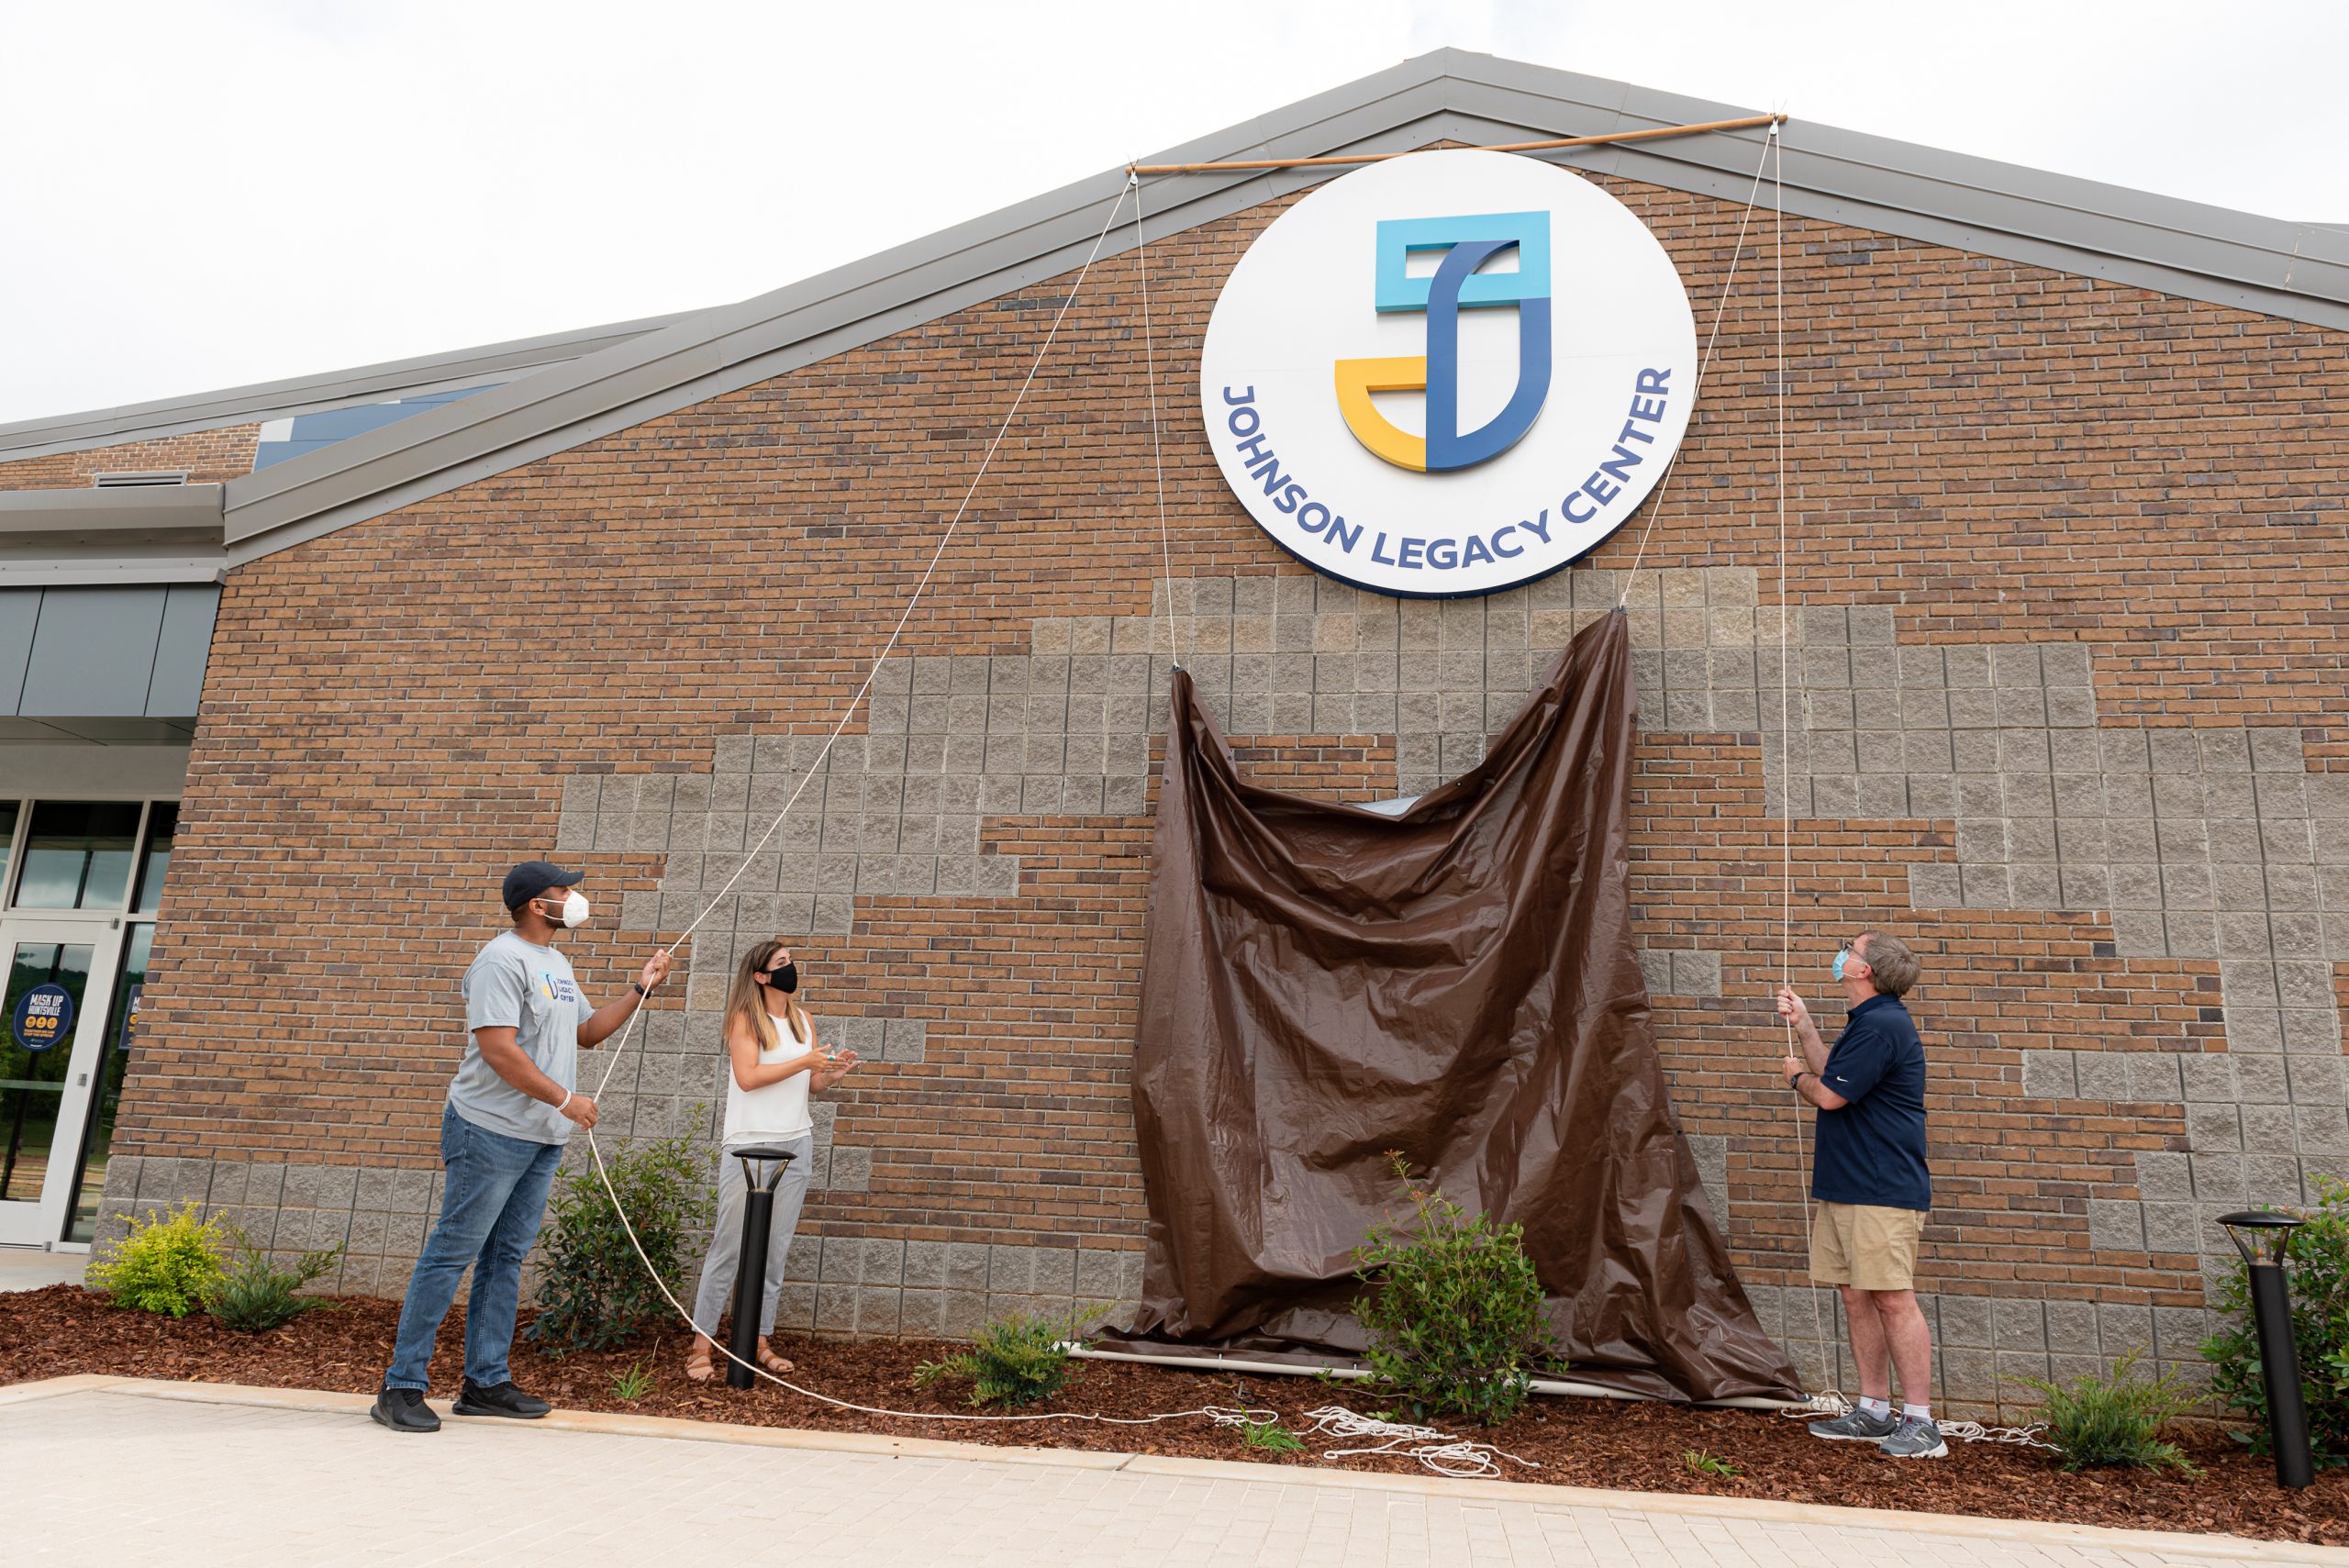 Johnson Legacy Center Grand Opening - August 15, 2020